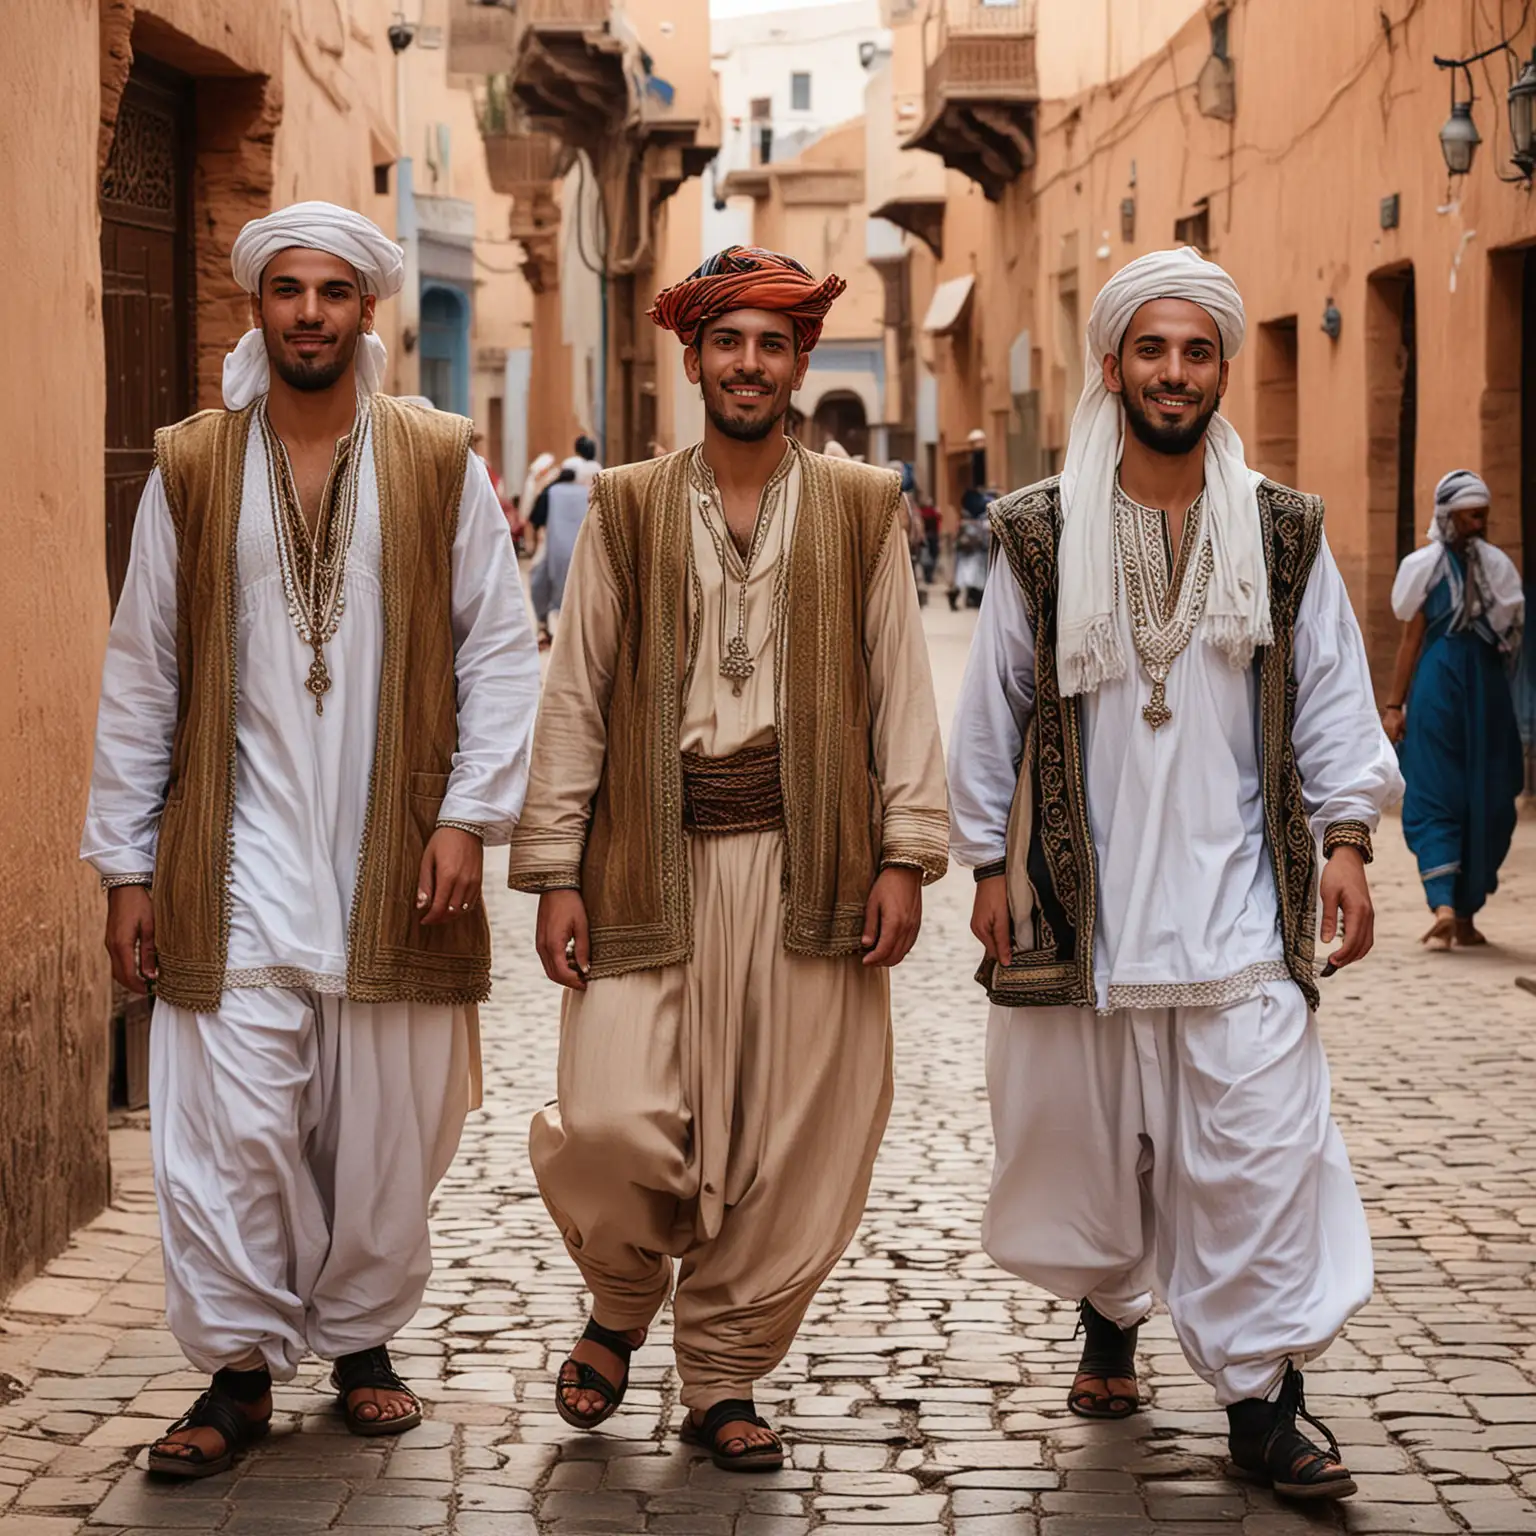 Traditional Moroccan Men Walking Through Colorful Street Market